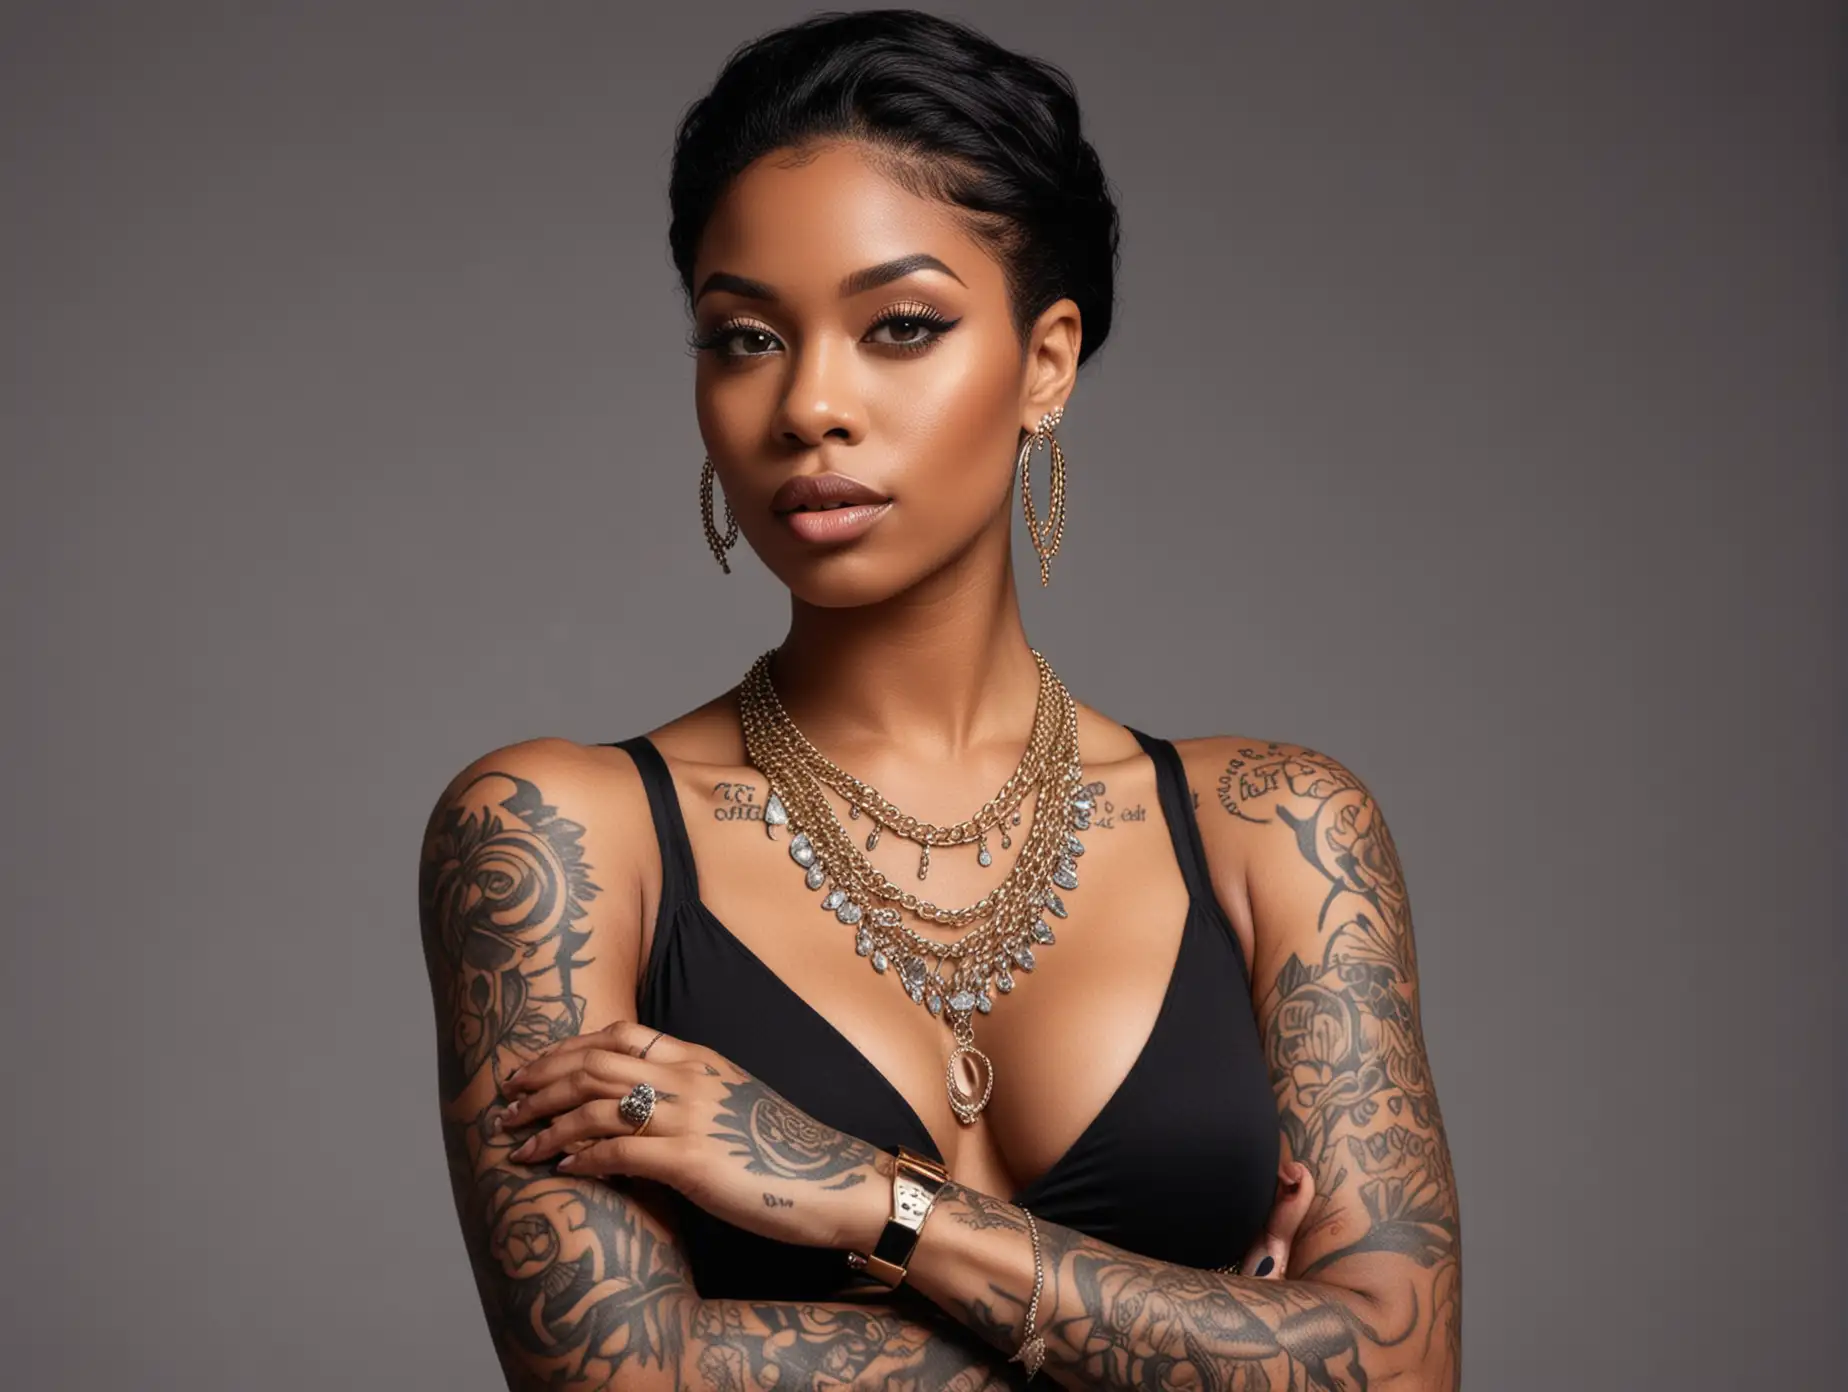 Elegant 27YearOld Black Woman Adorned in Luxury Jewelry and Tattoos